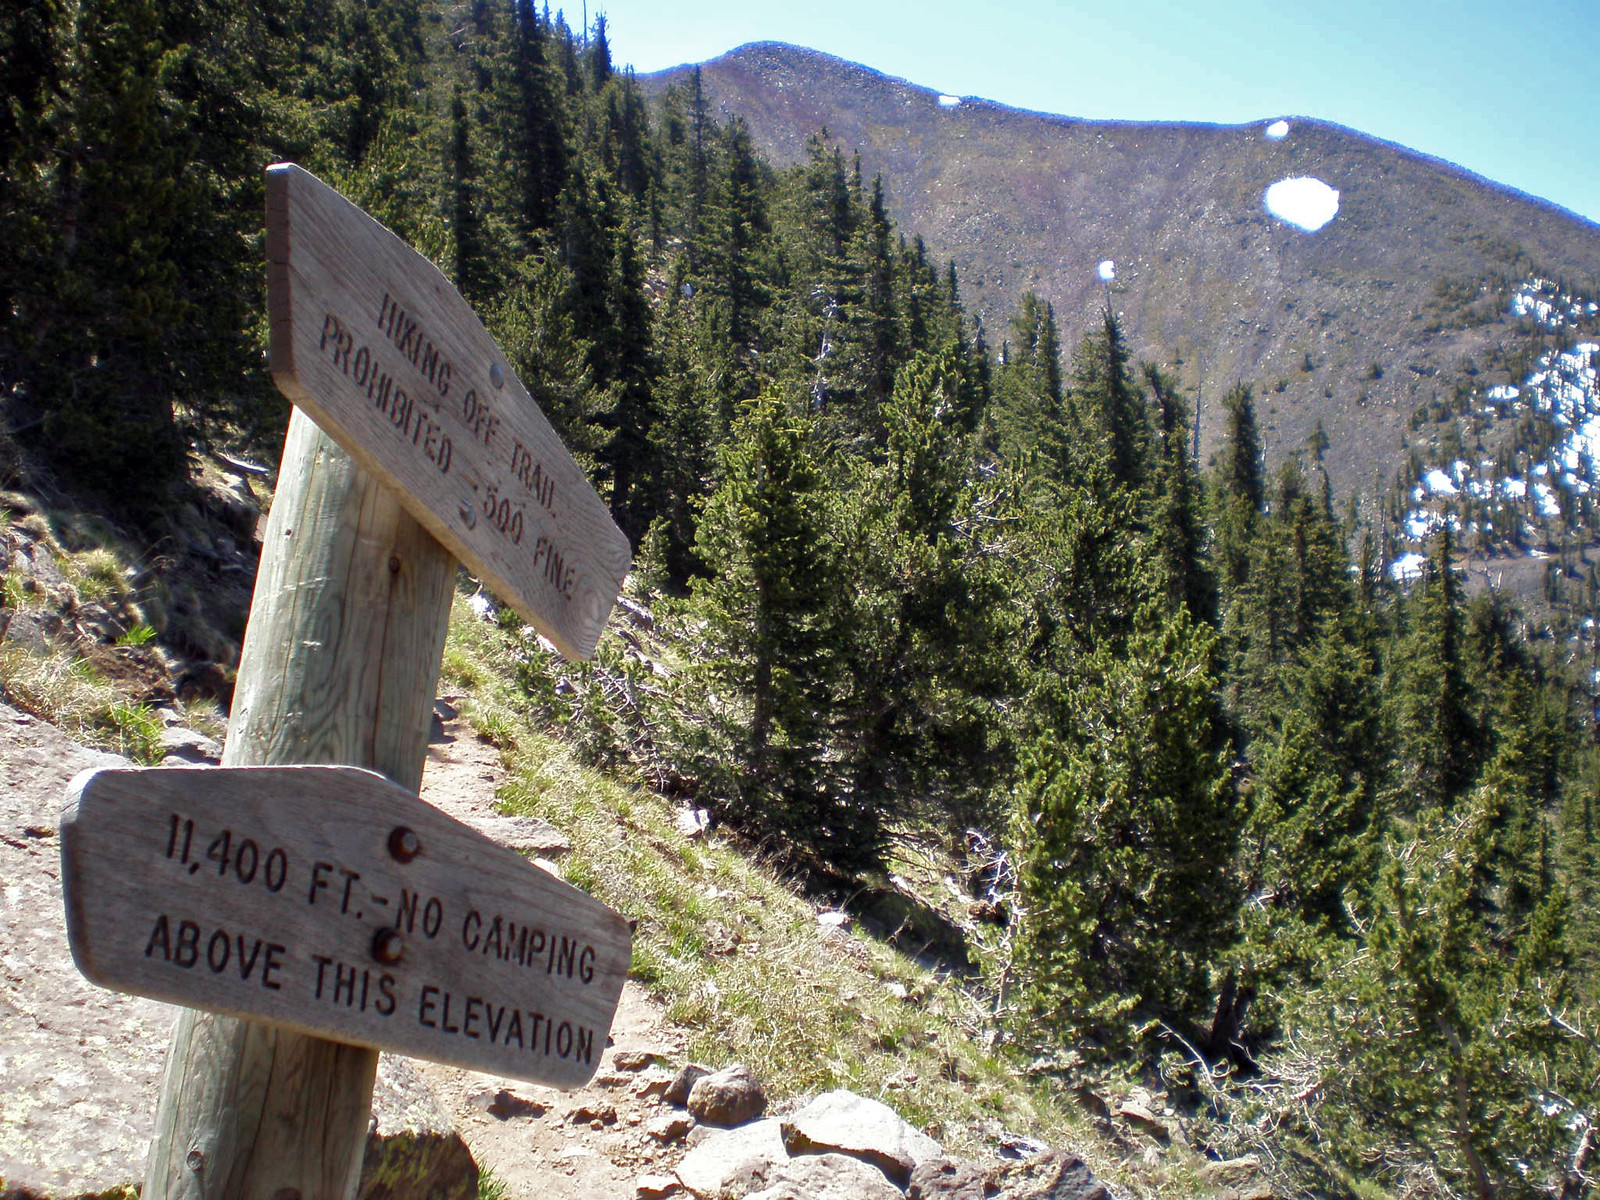 Humphreys Trail 11,400 ft. marker